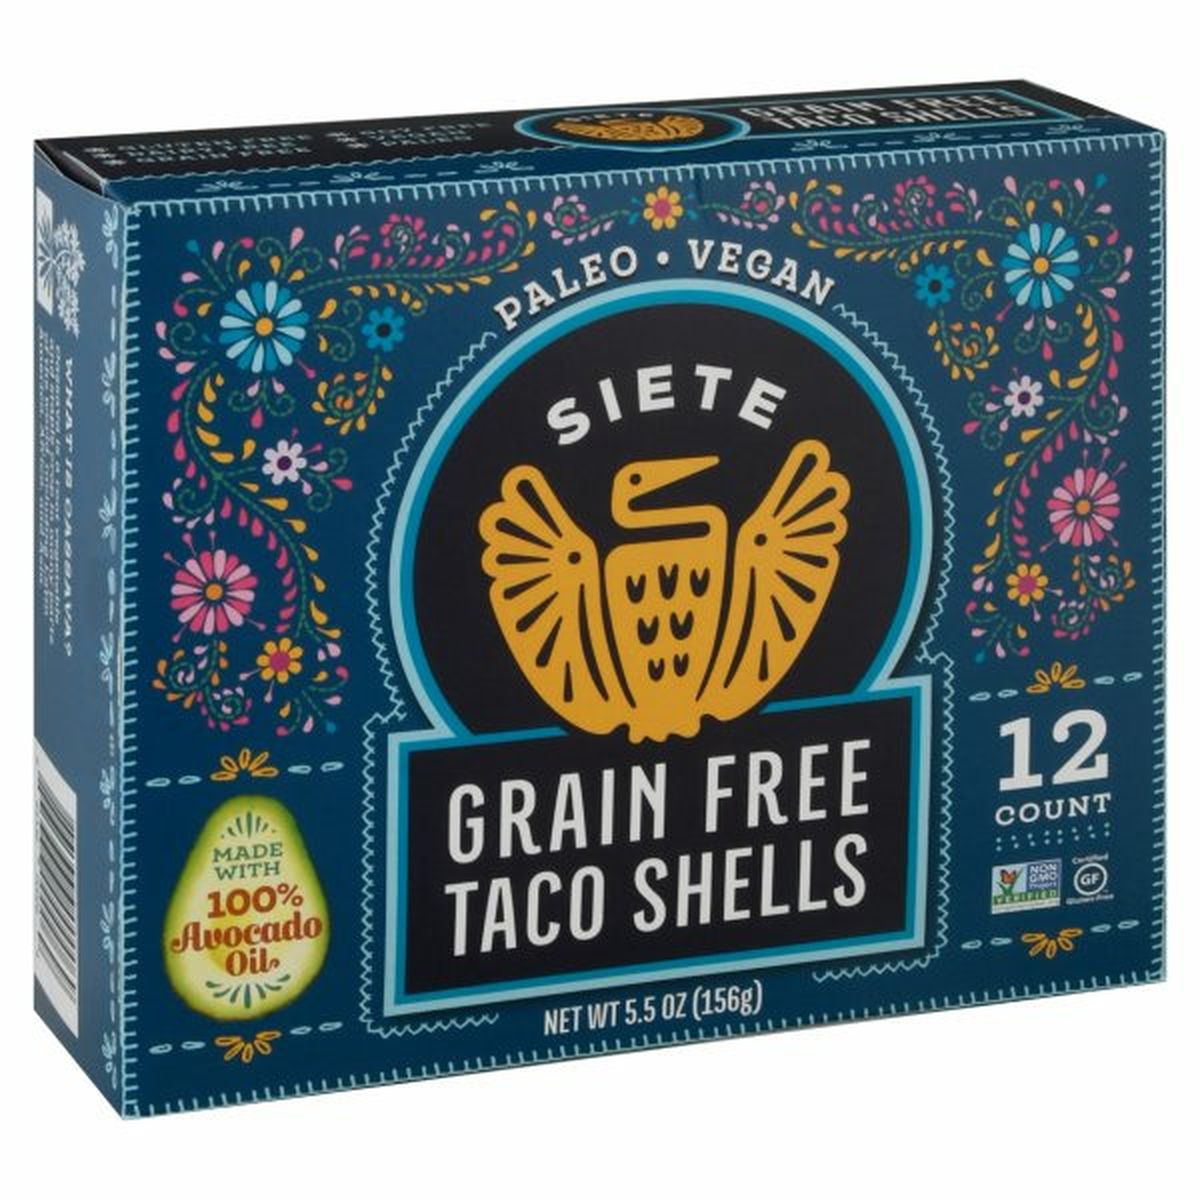 Calories in Siete Taco Shells, Grain Free